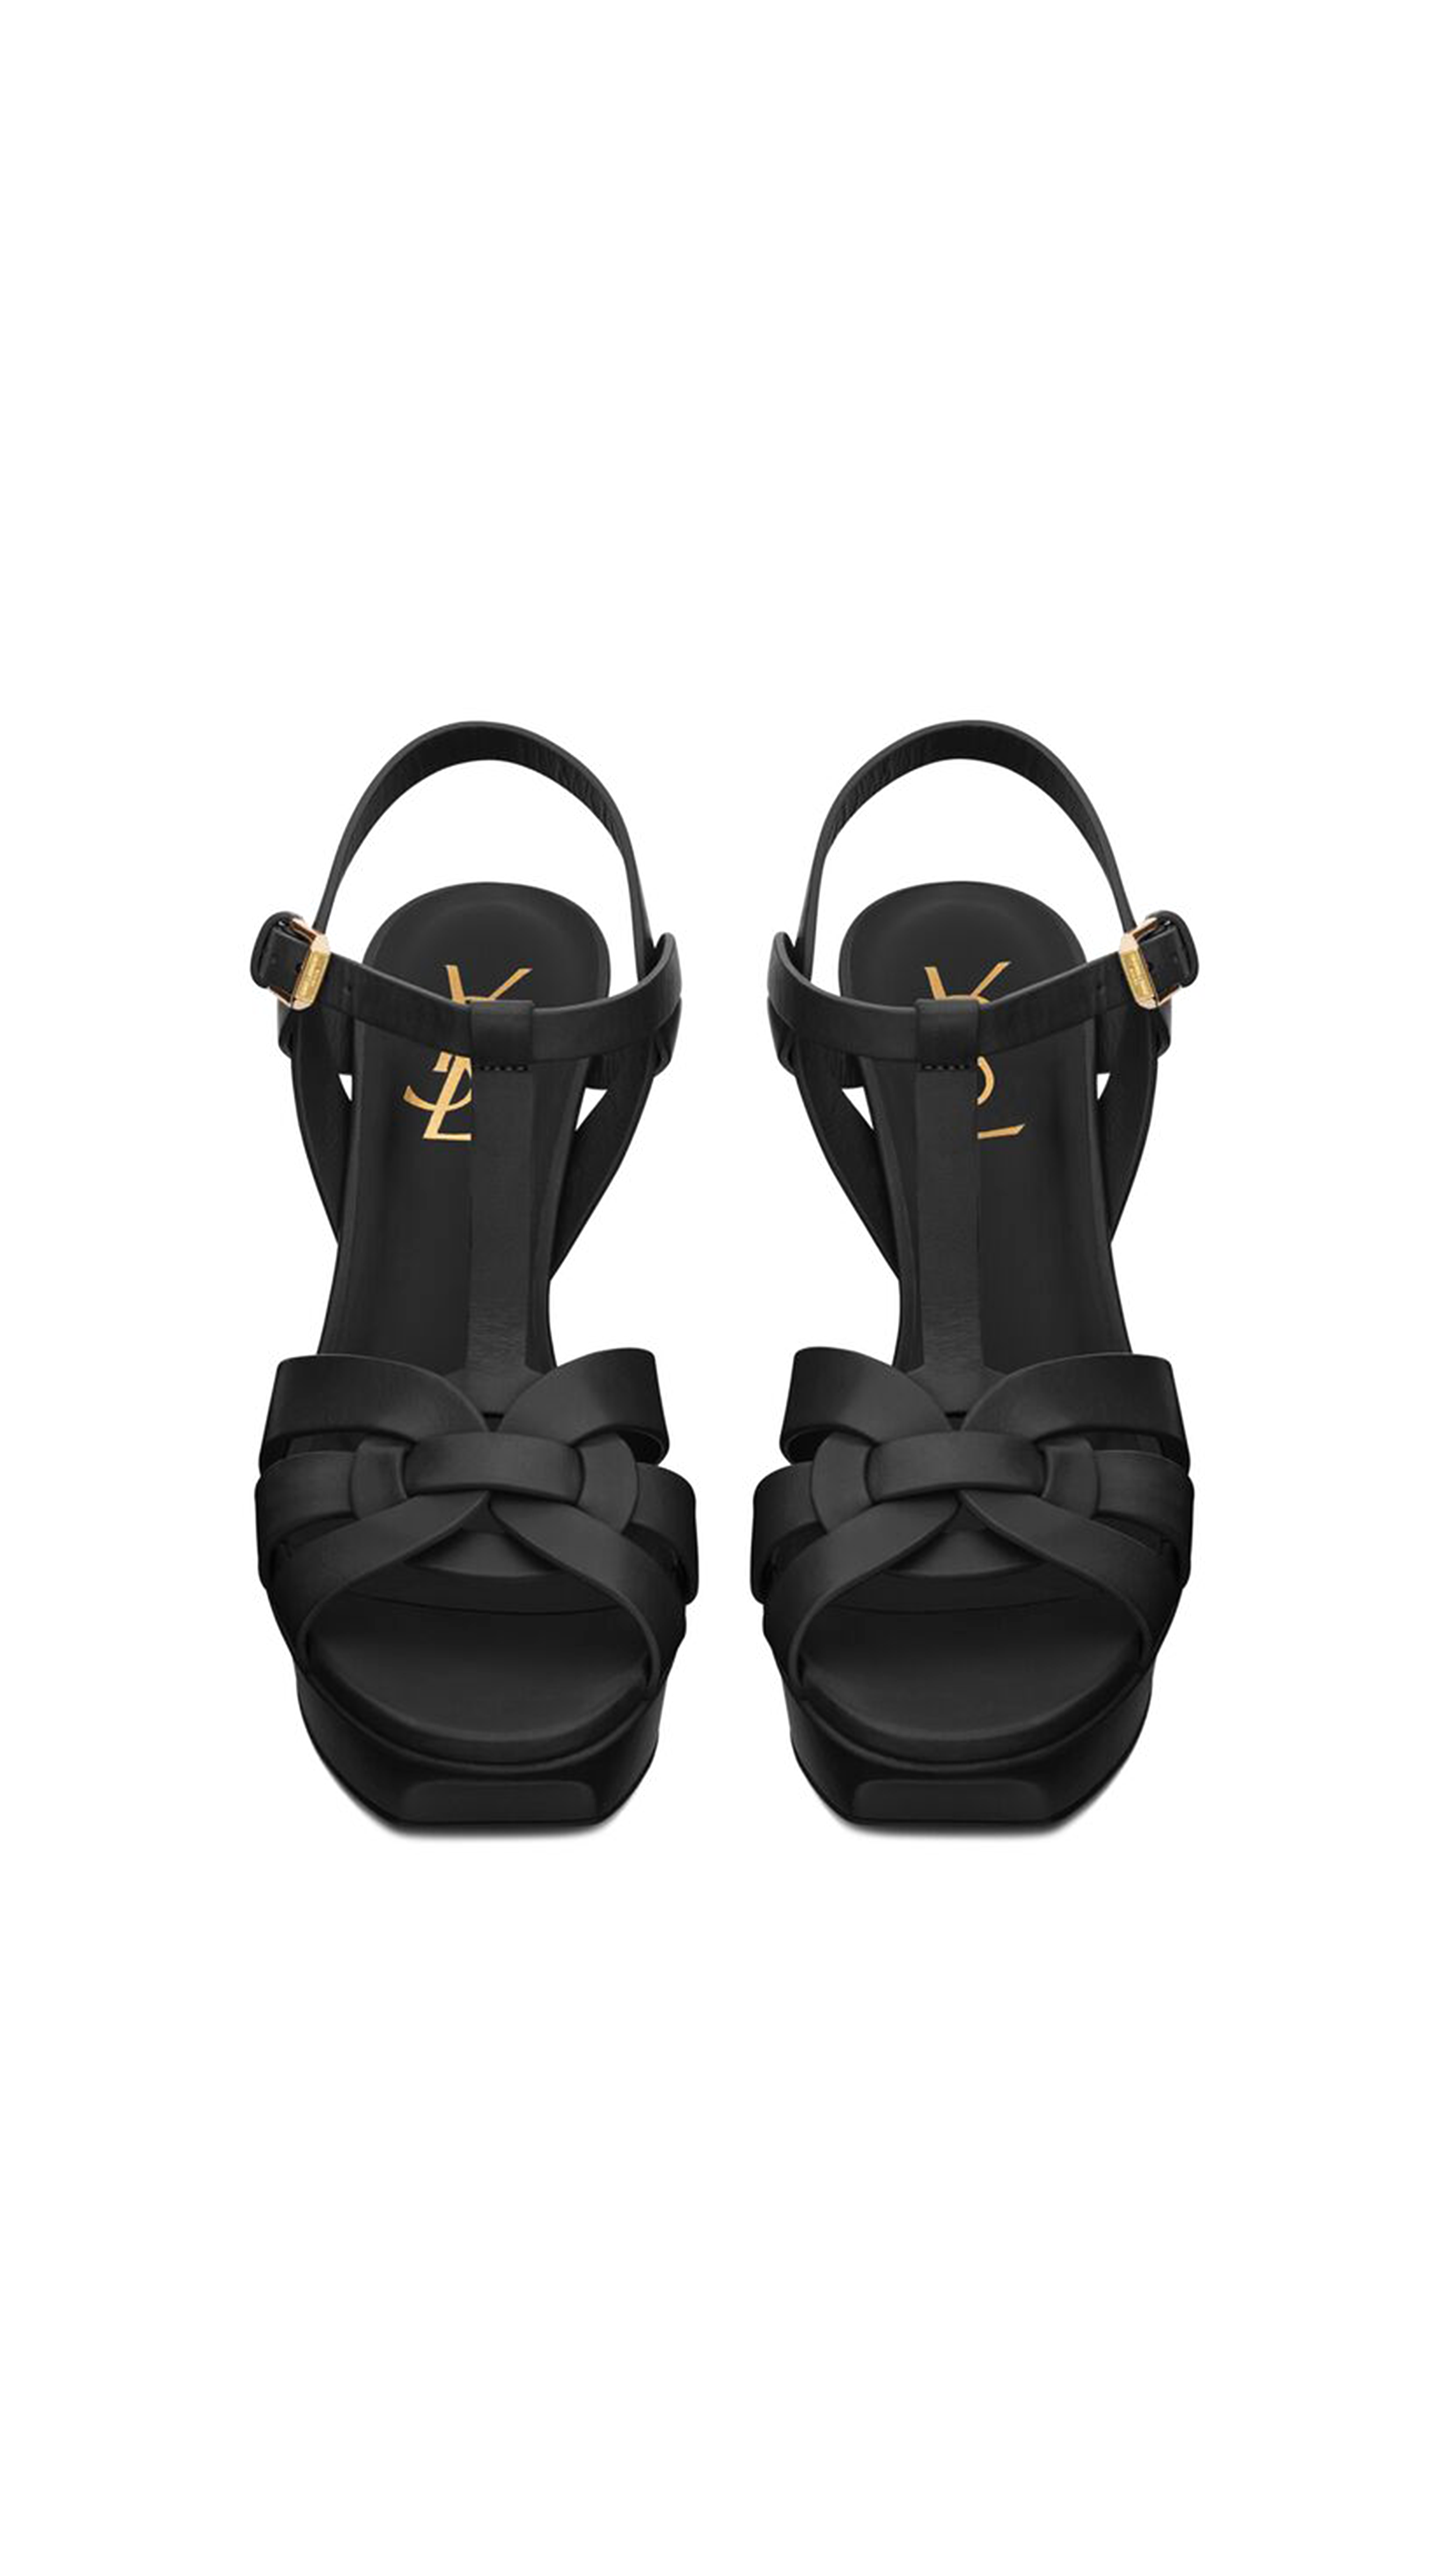 Tribute Platform Sandals in Smooth Leather - Black